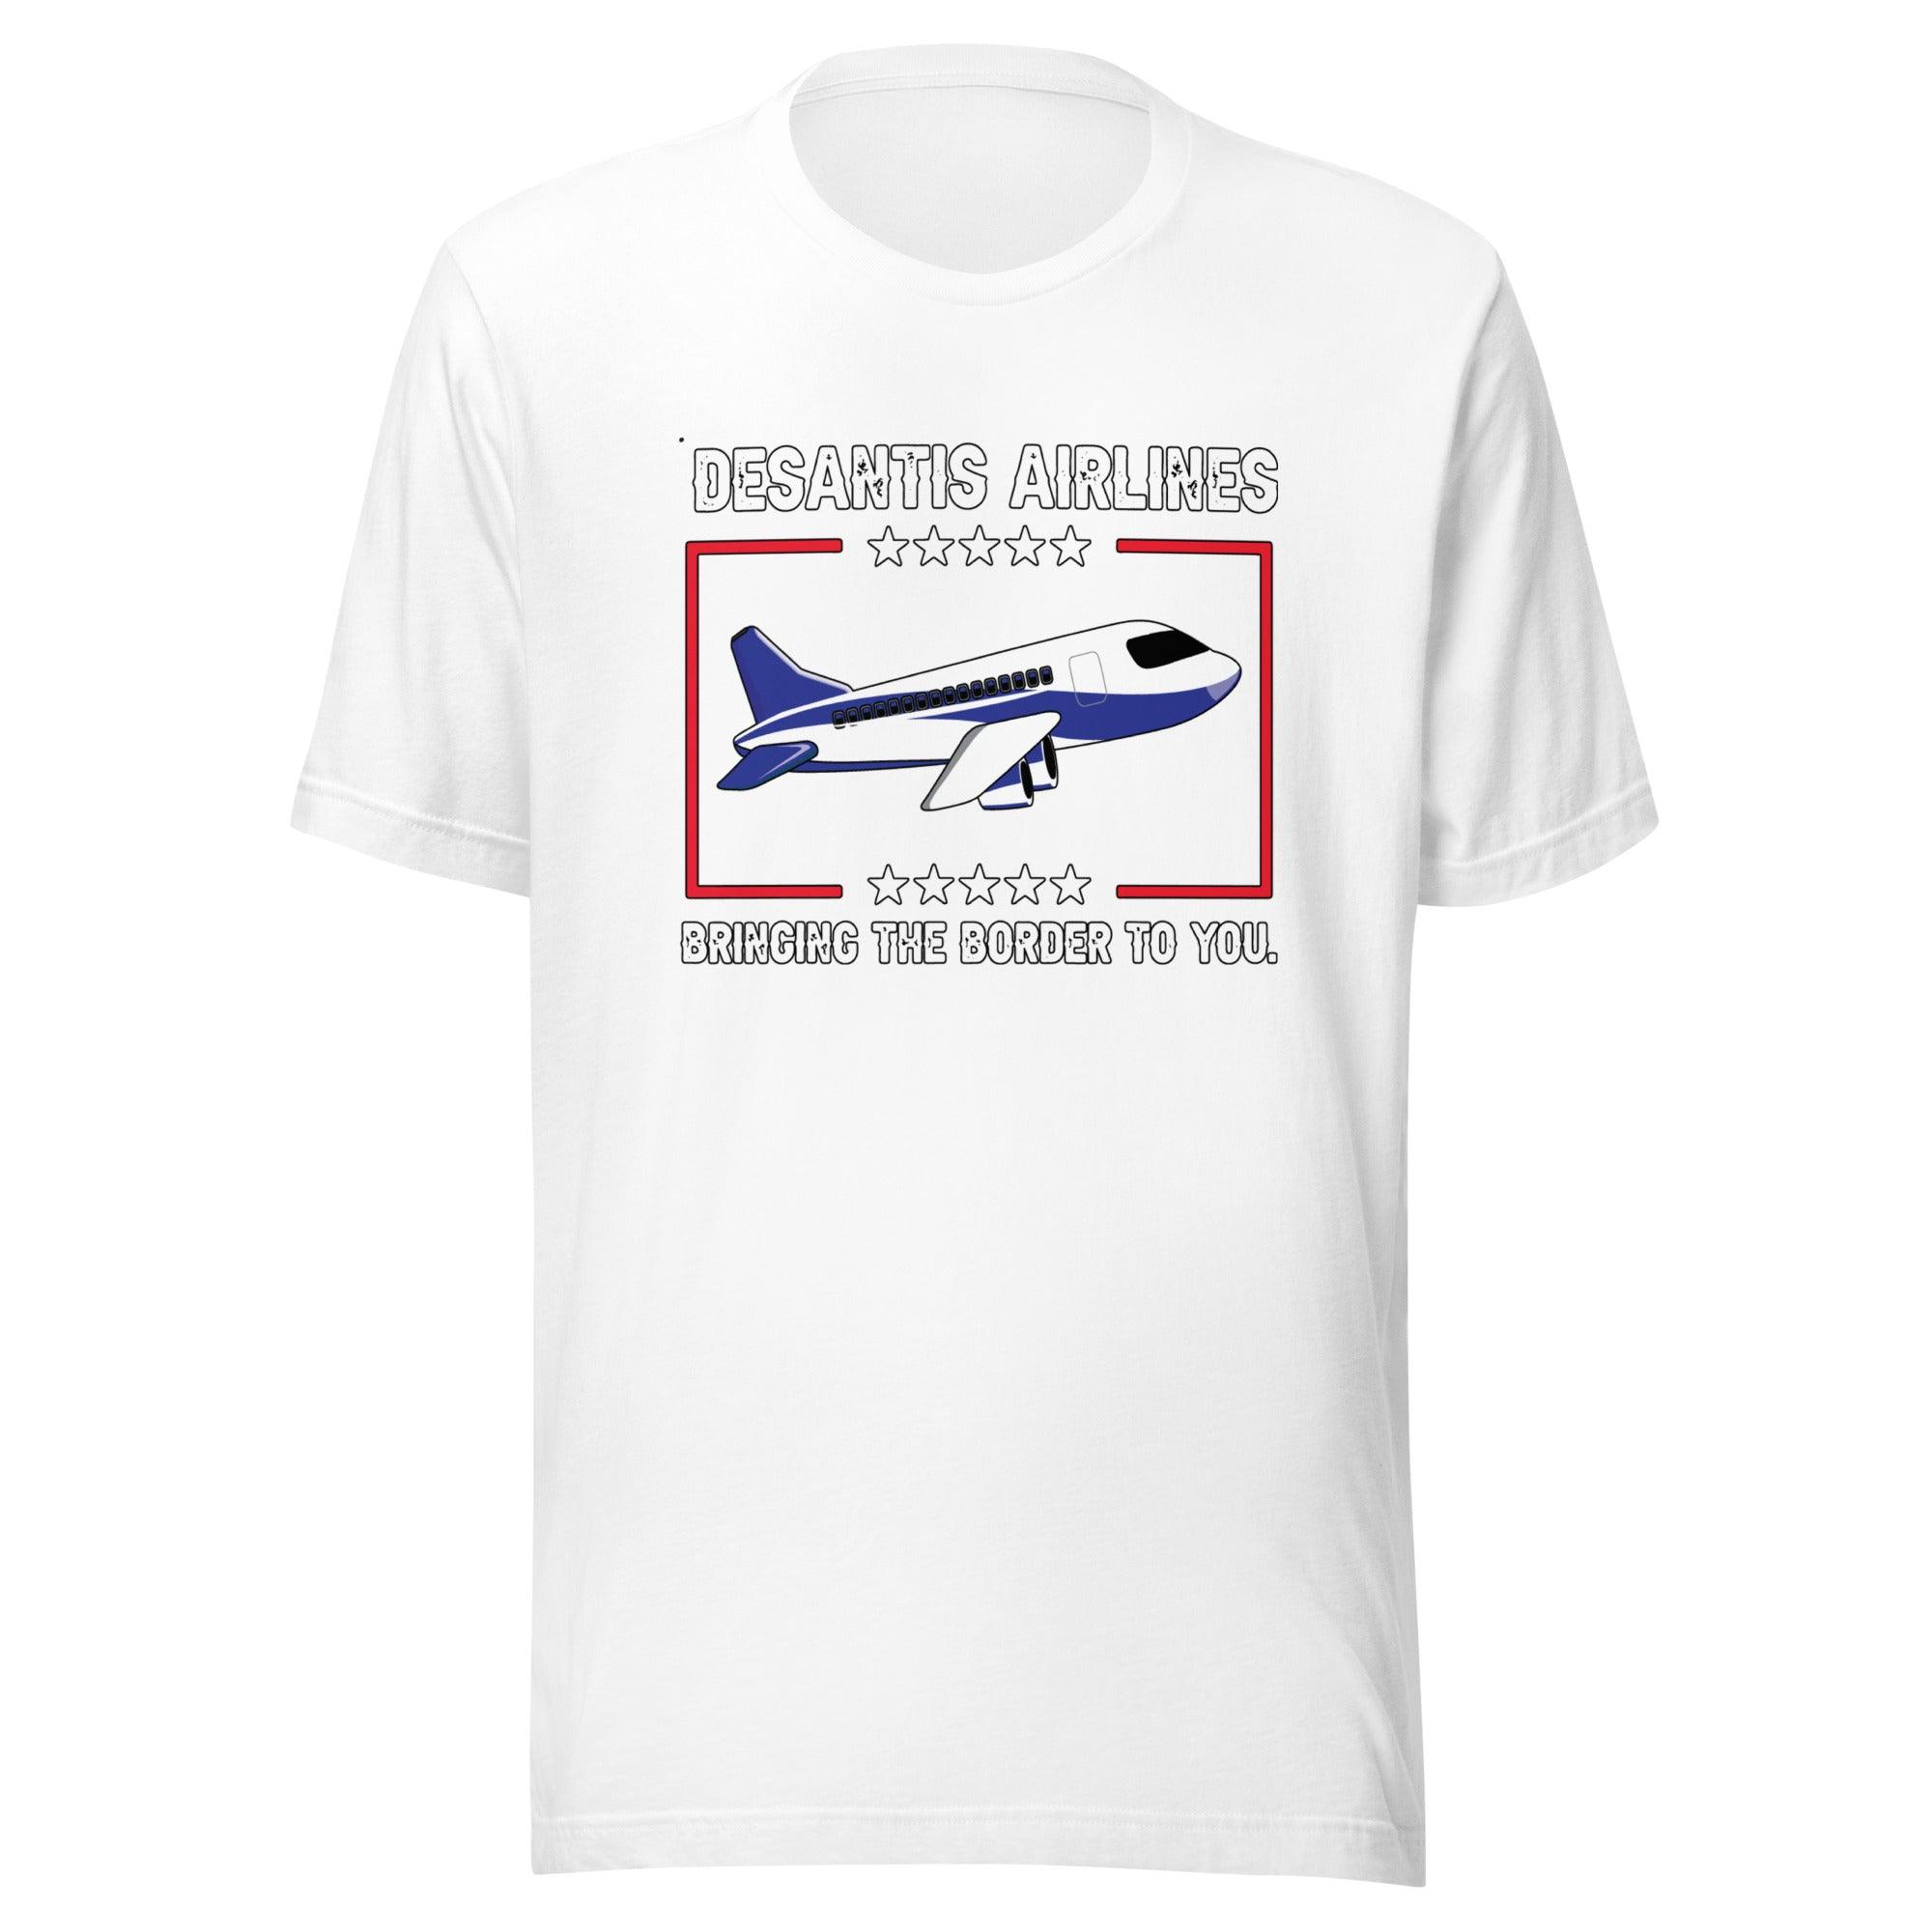 Desantis T-shirt Desantis Air Bringing The Border To You Top Koala Tee - TopKoalaTee